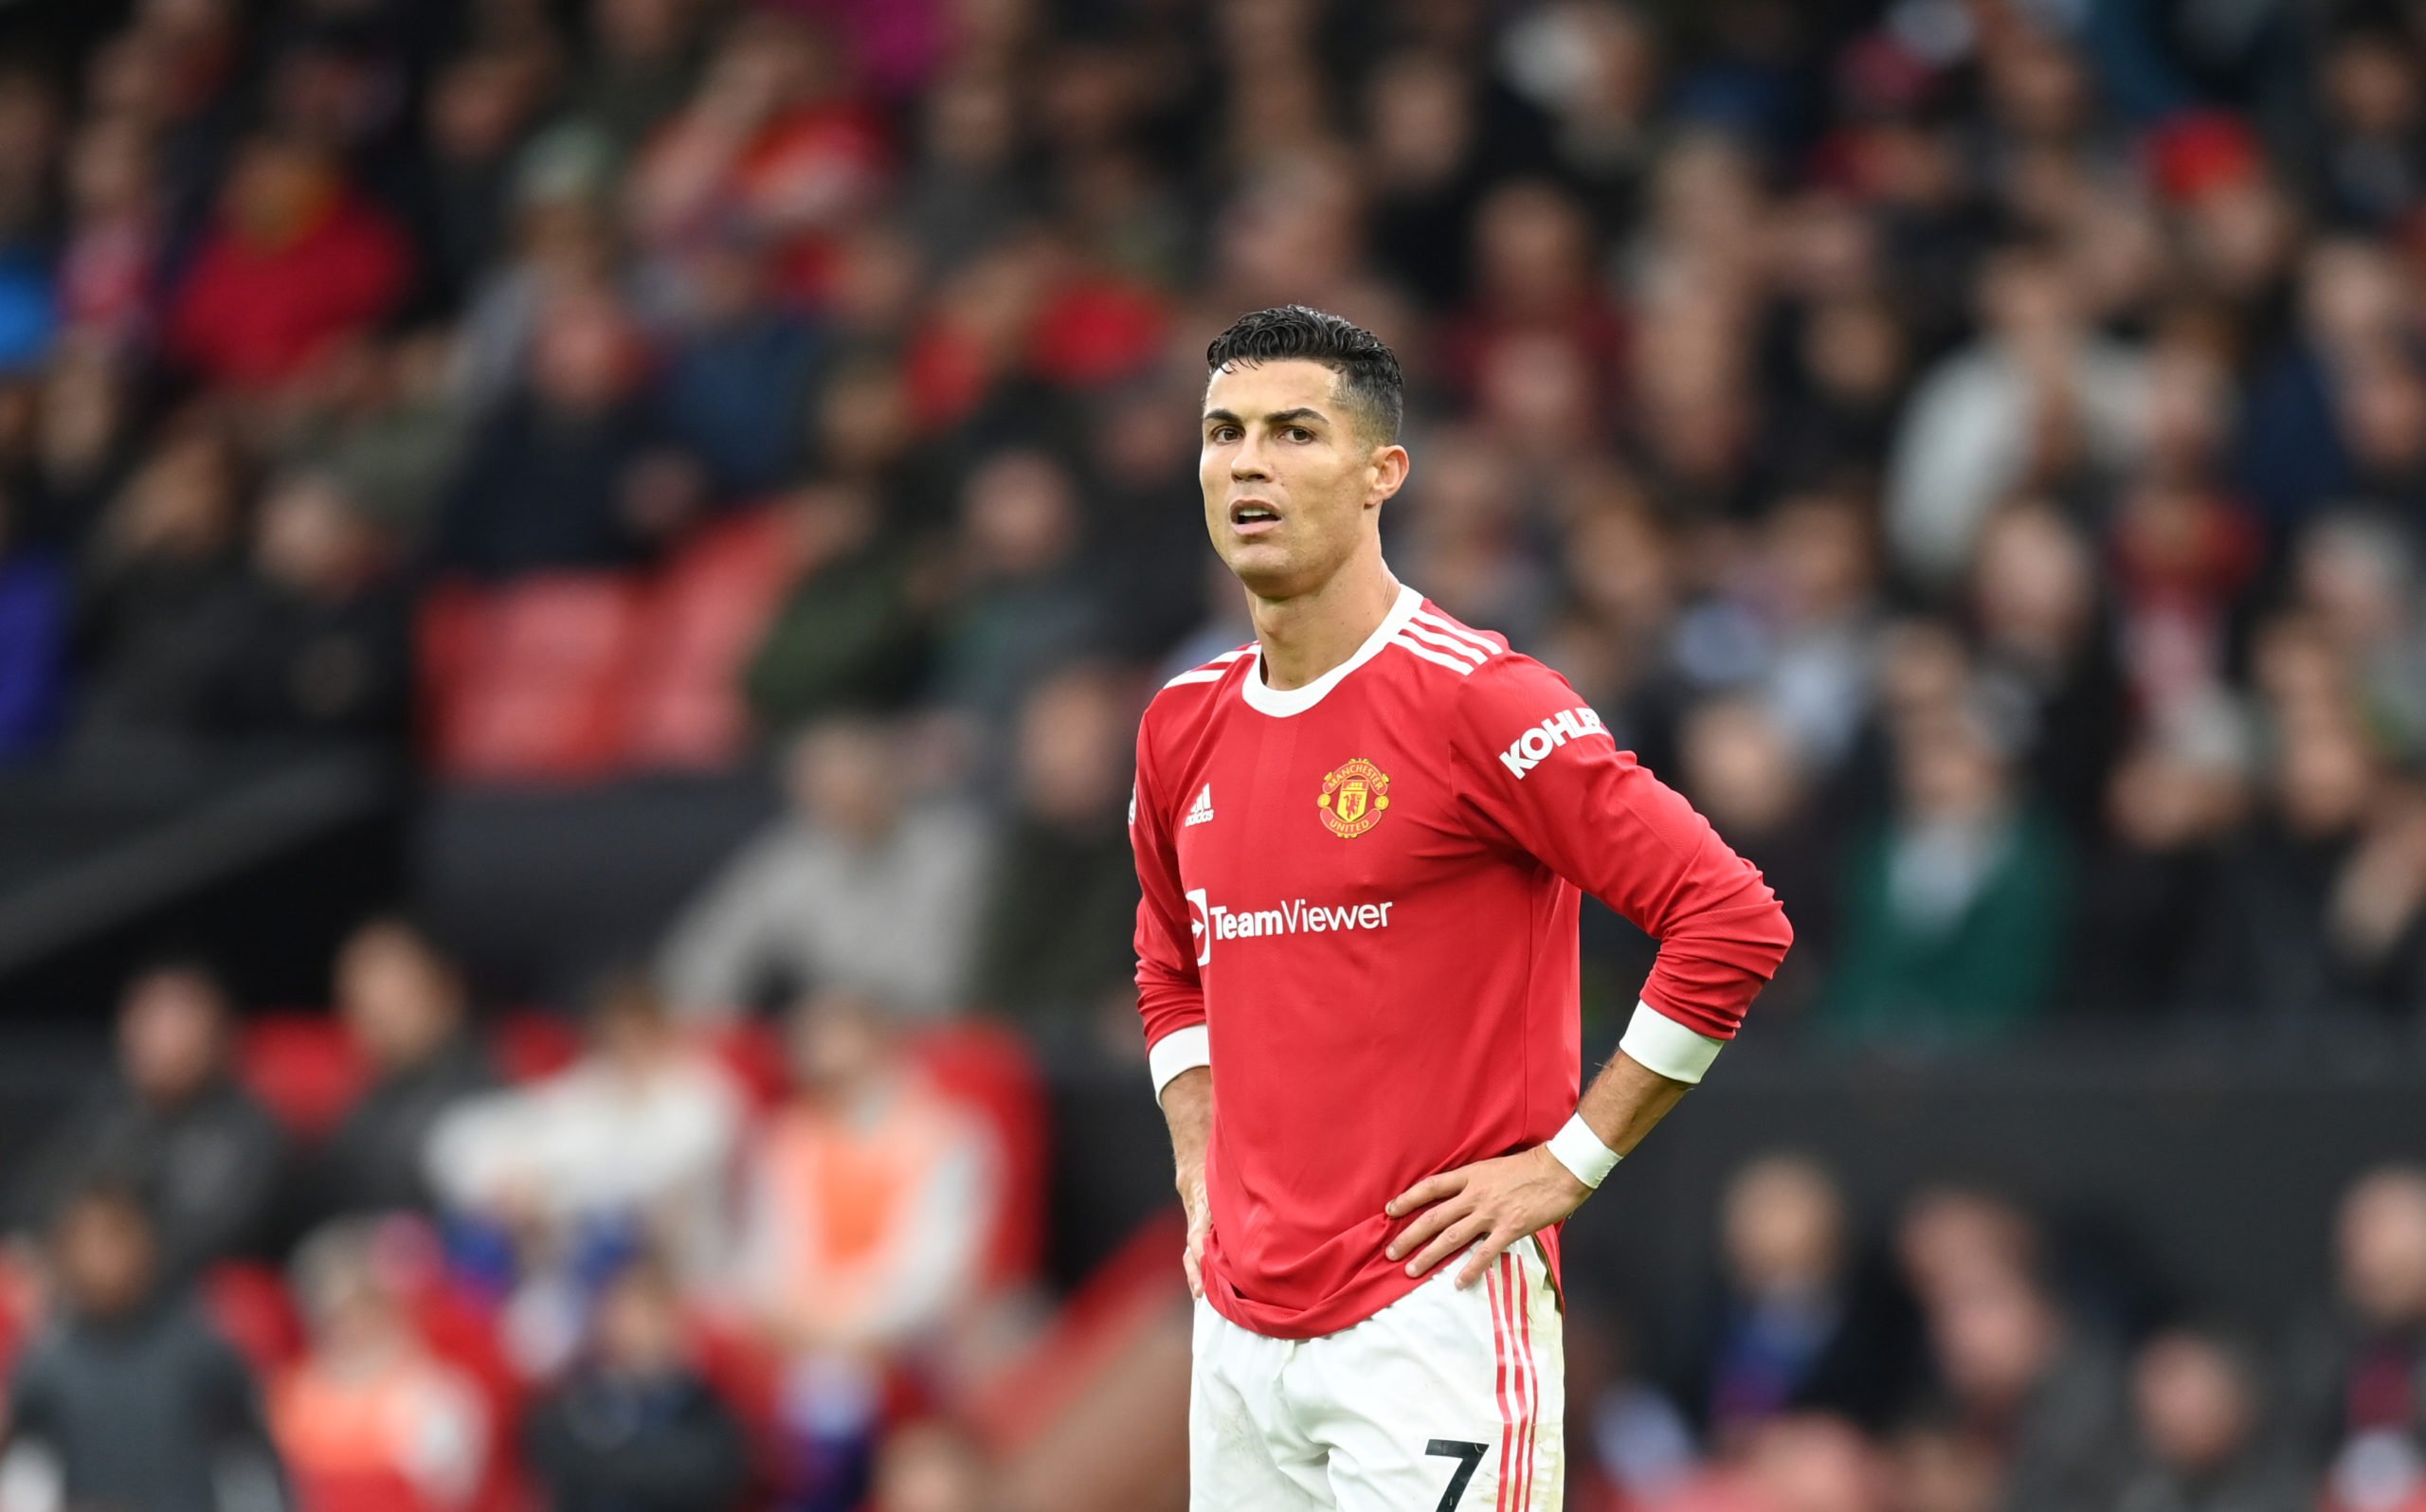 Manchester United Player Ratings Vs Everton - Ronaldo fail to impress.